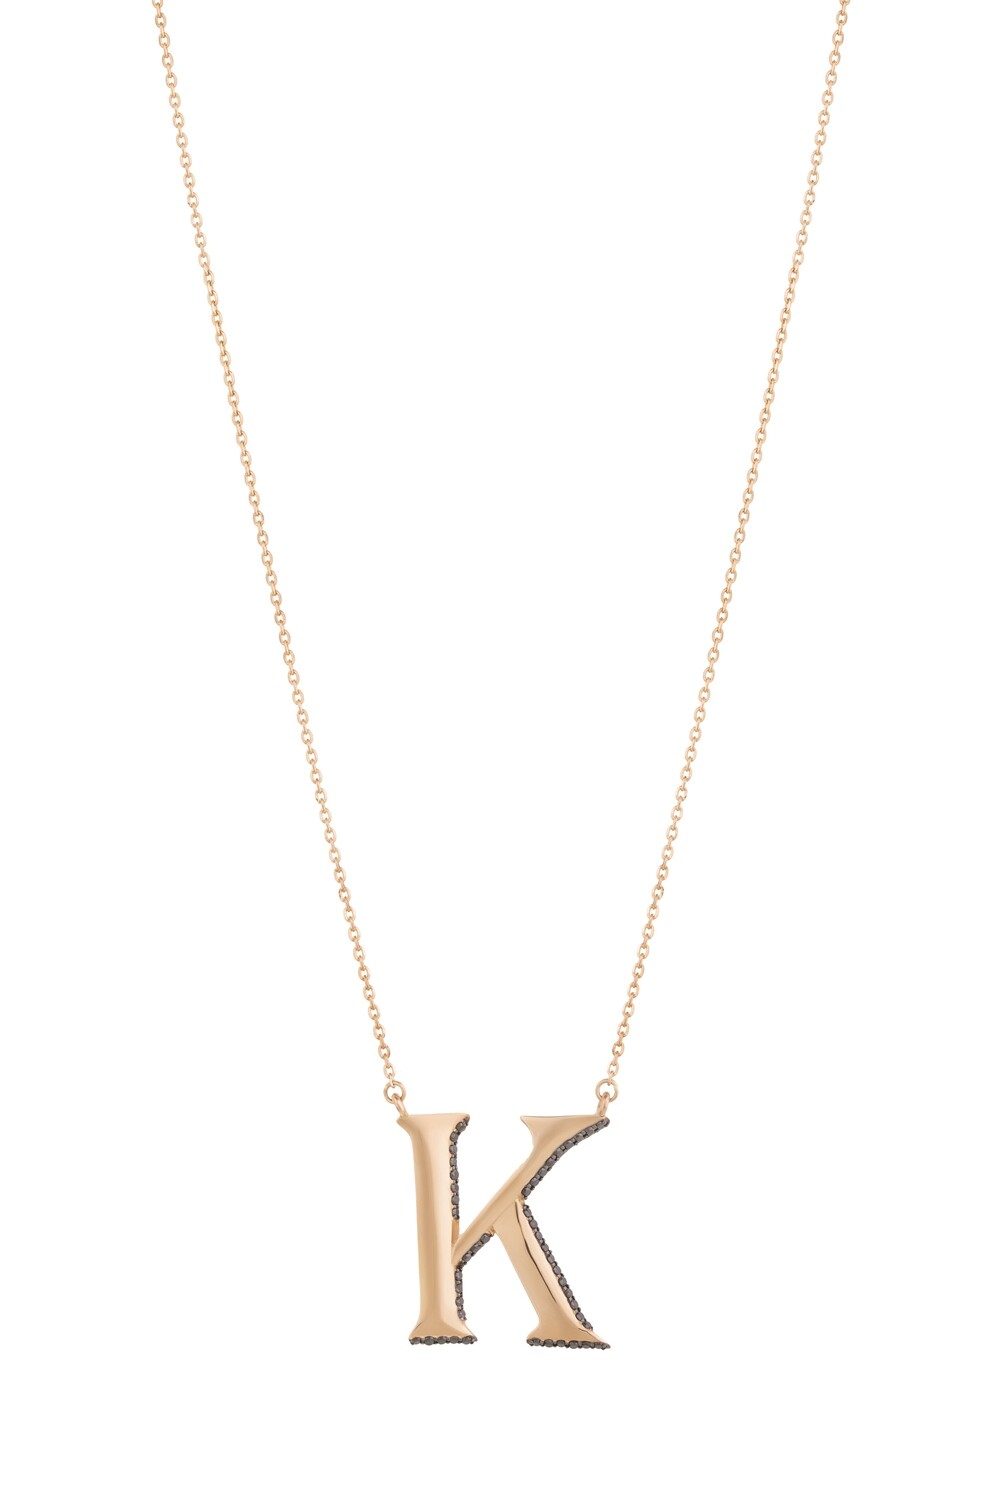 Initials Fancy Diamond Necklace, K